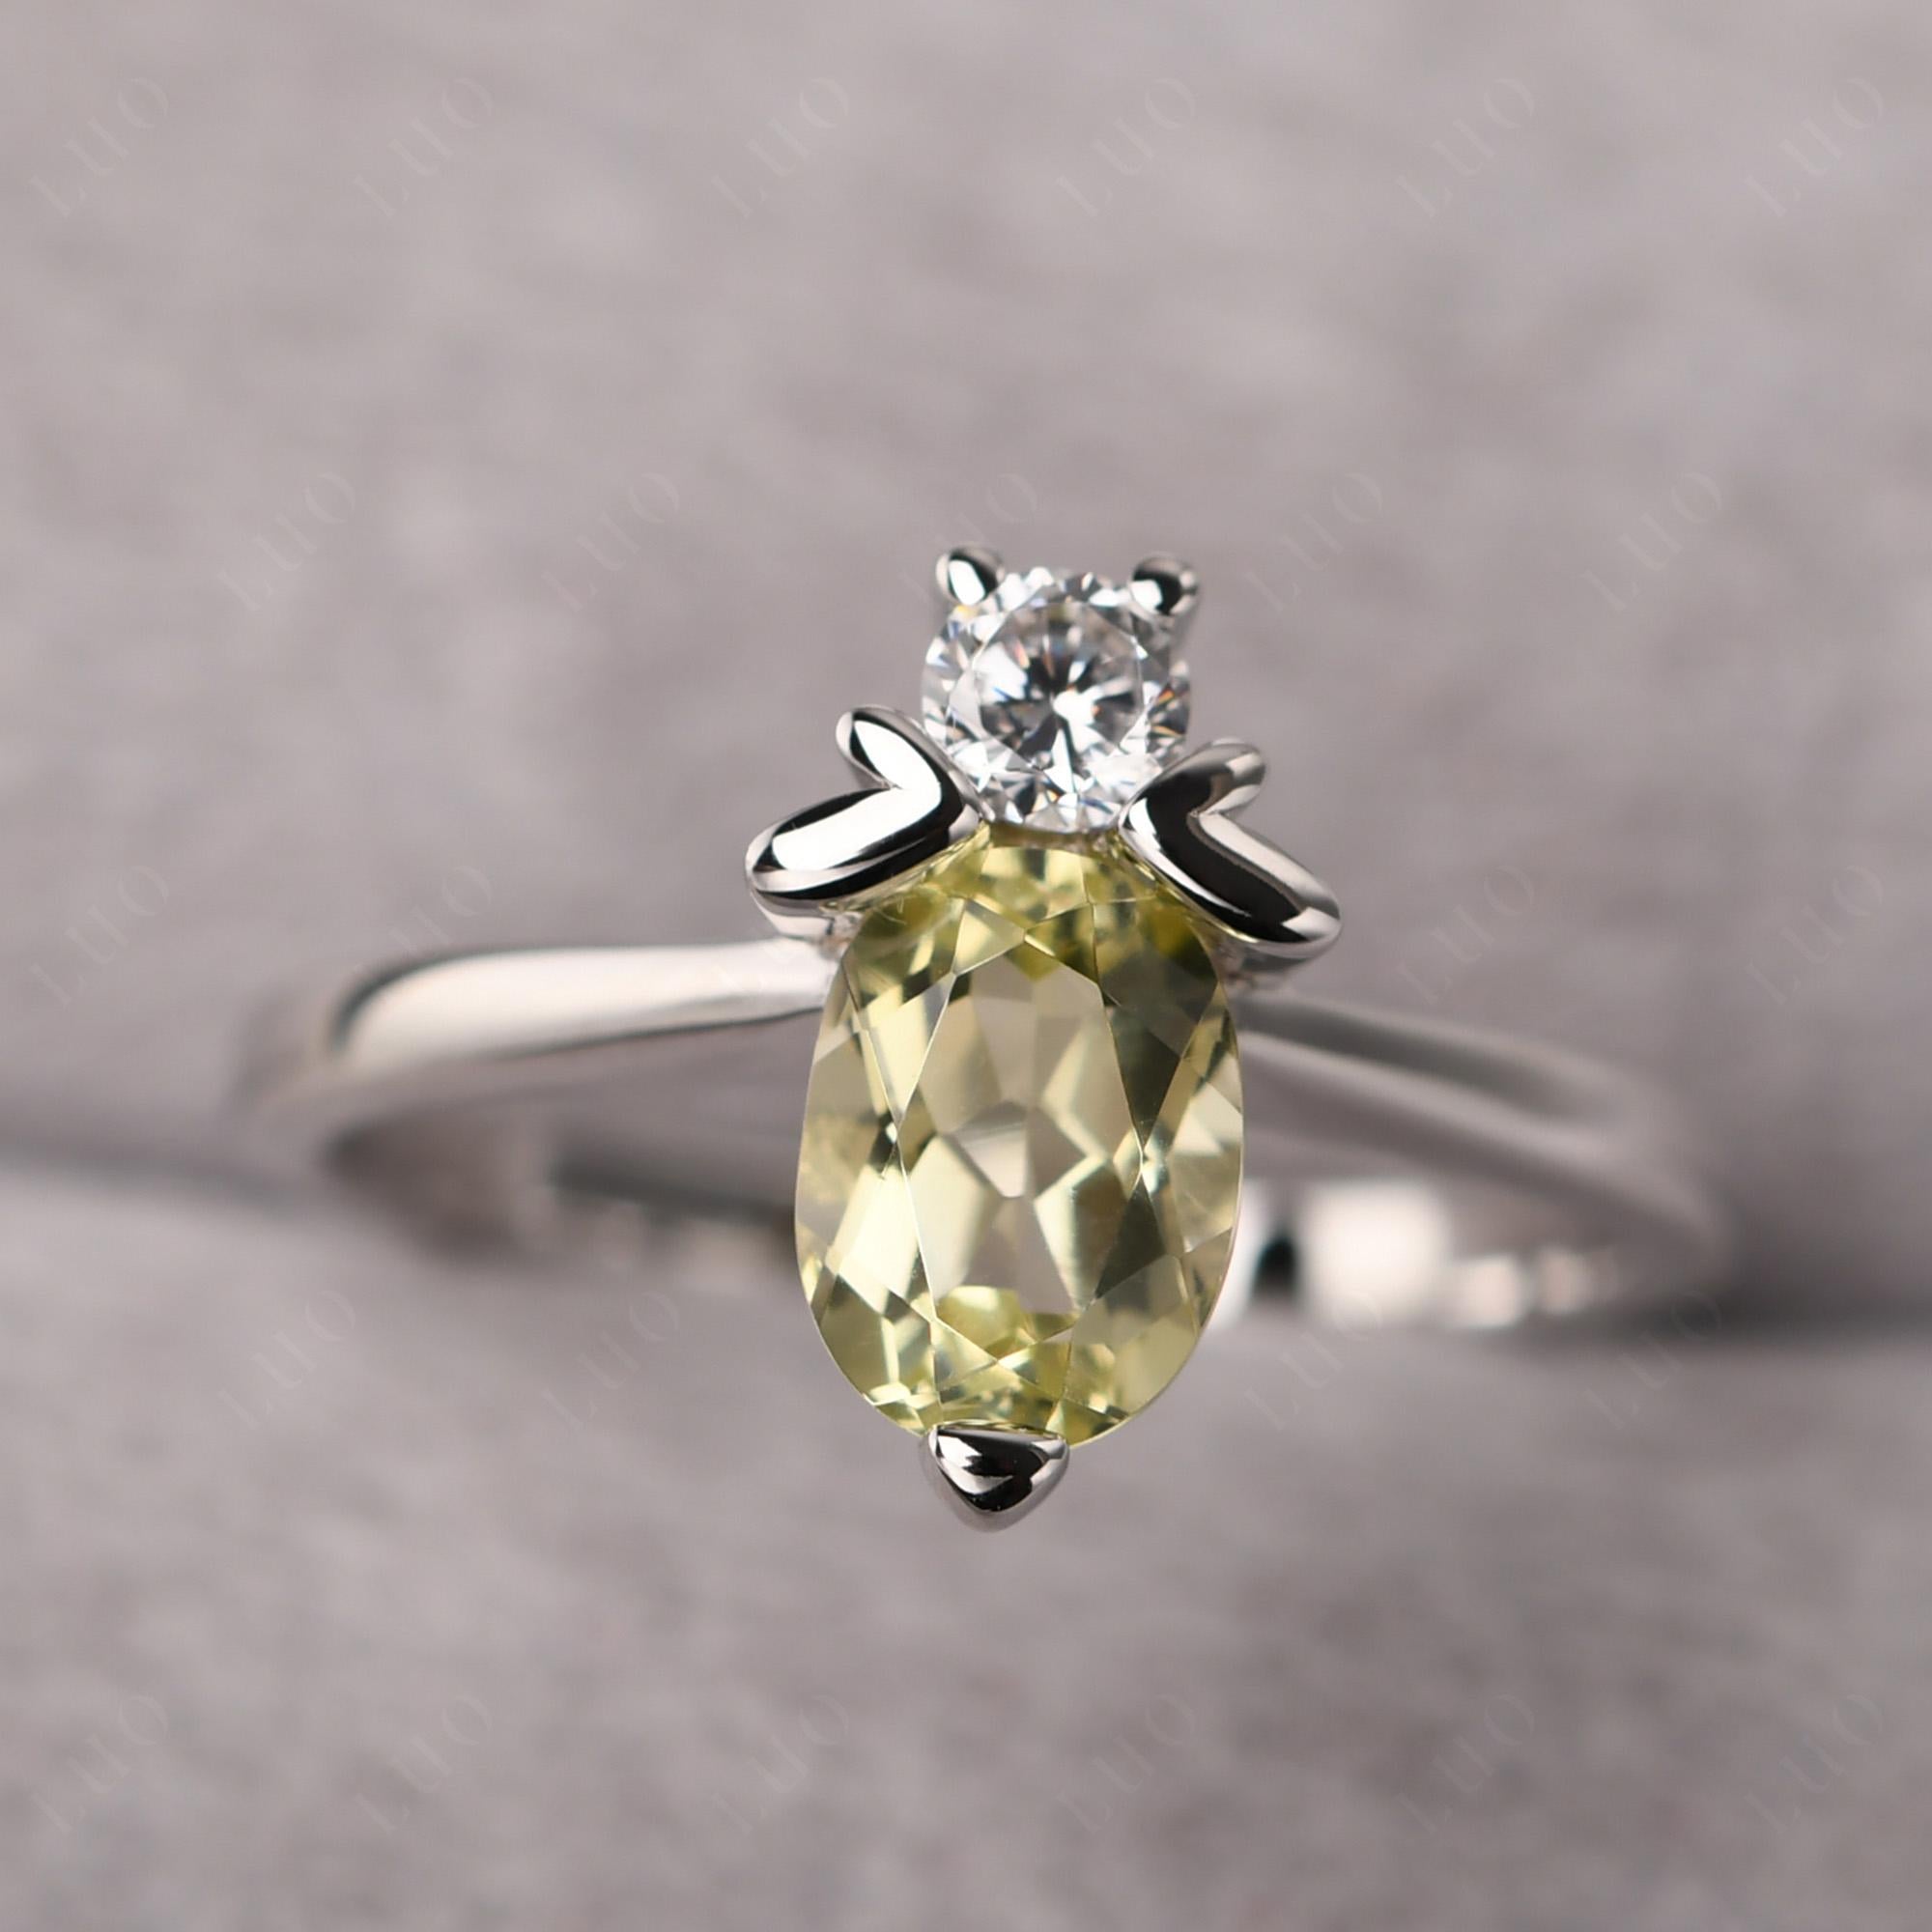 Lemon Quartz Nature Inspired Bee Ring - LUO Jewelry